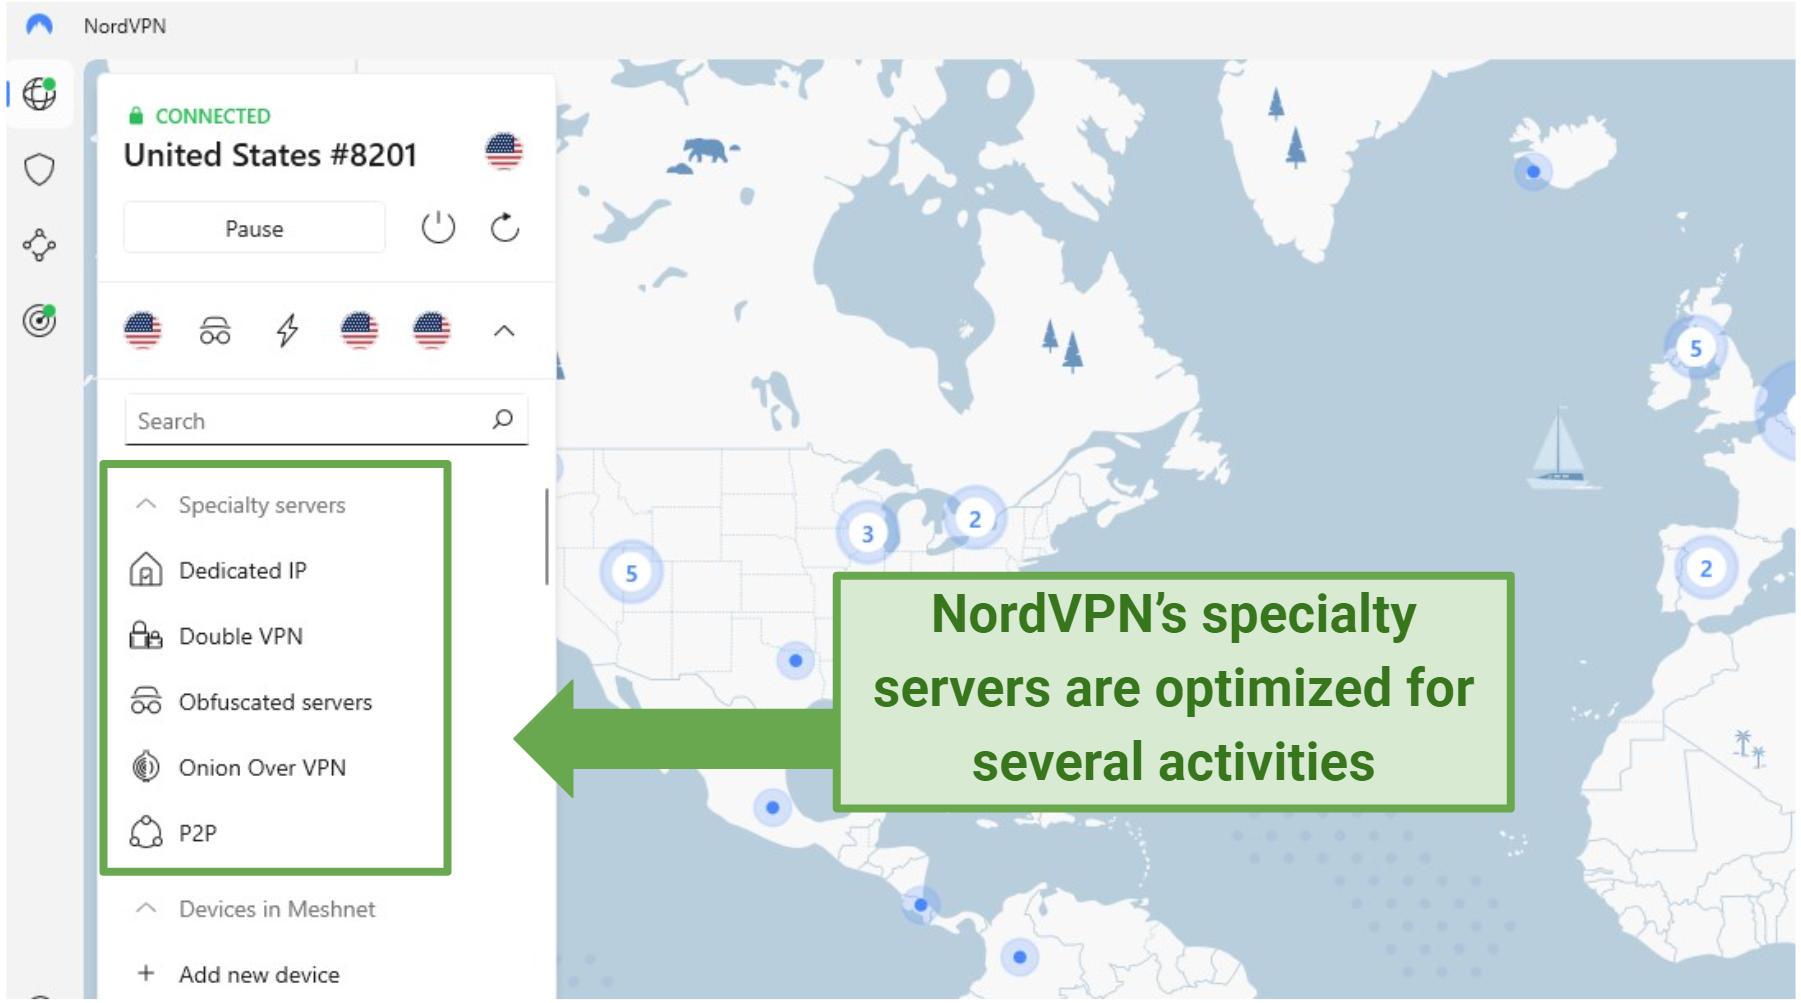 A screenshot of NordVPN specialty servers